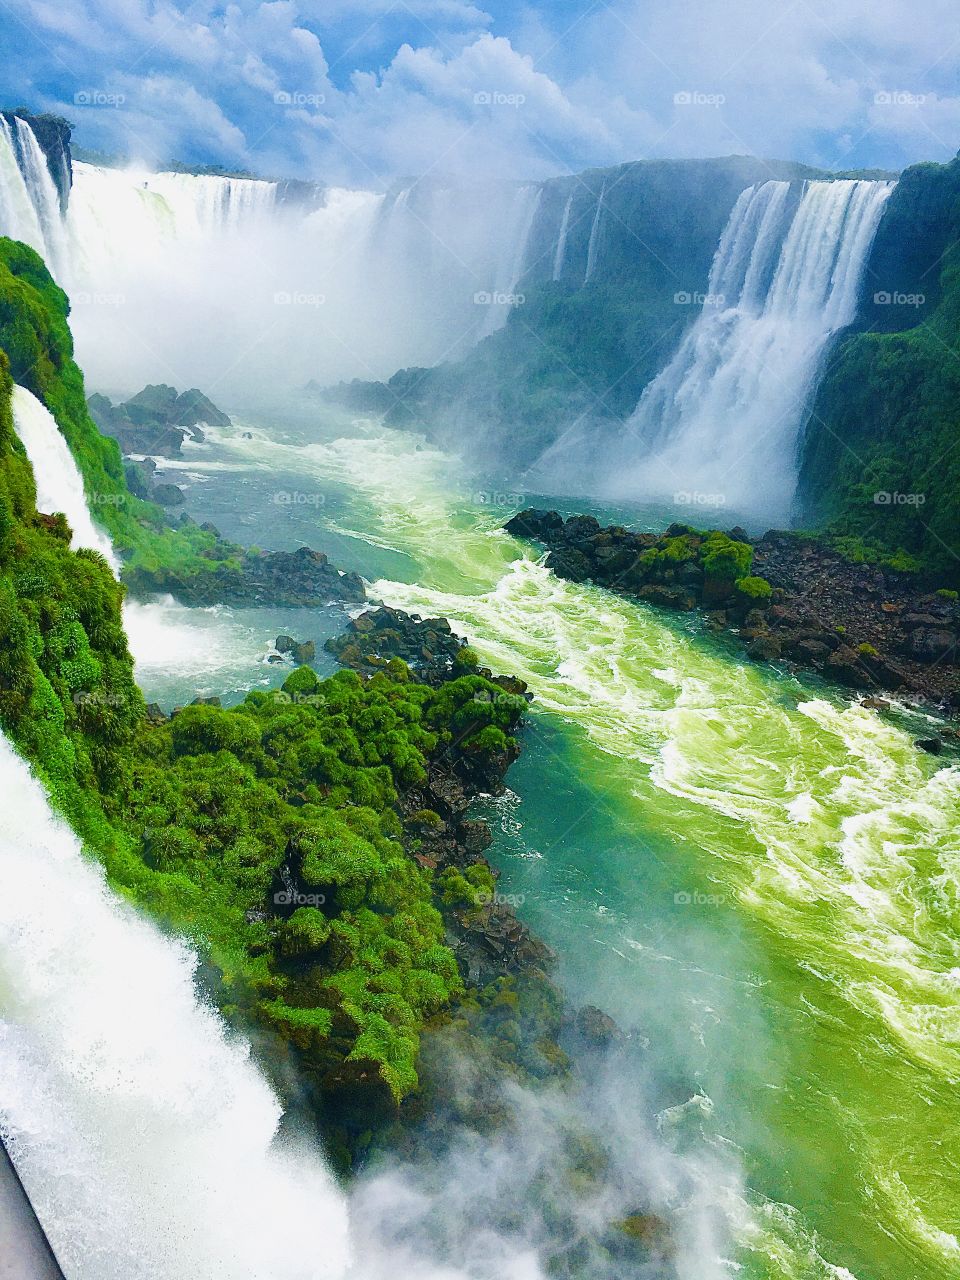 Amazing view of the Iguazu Falls